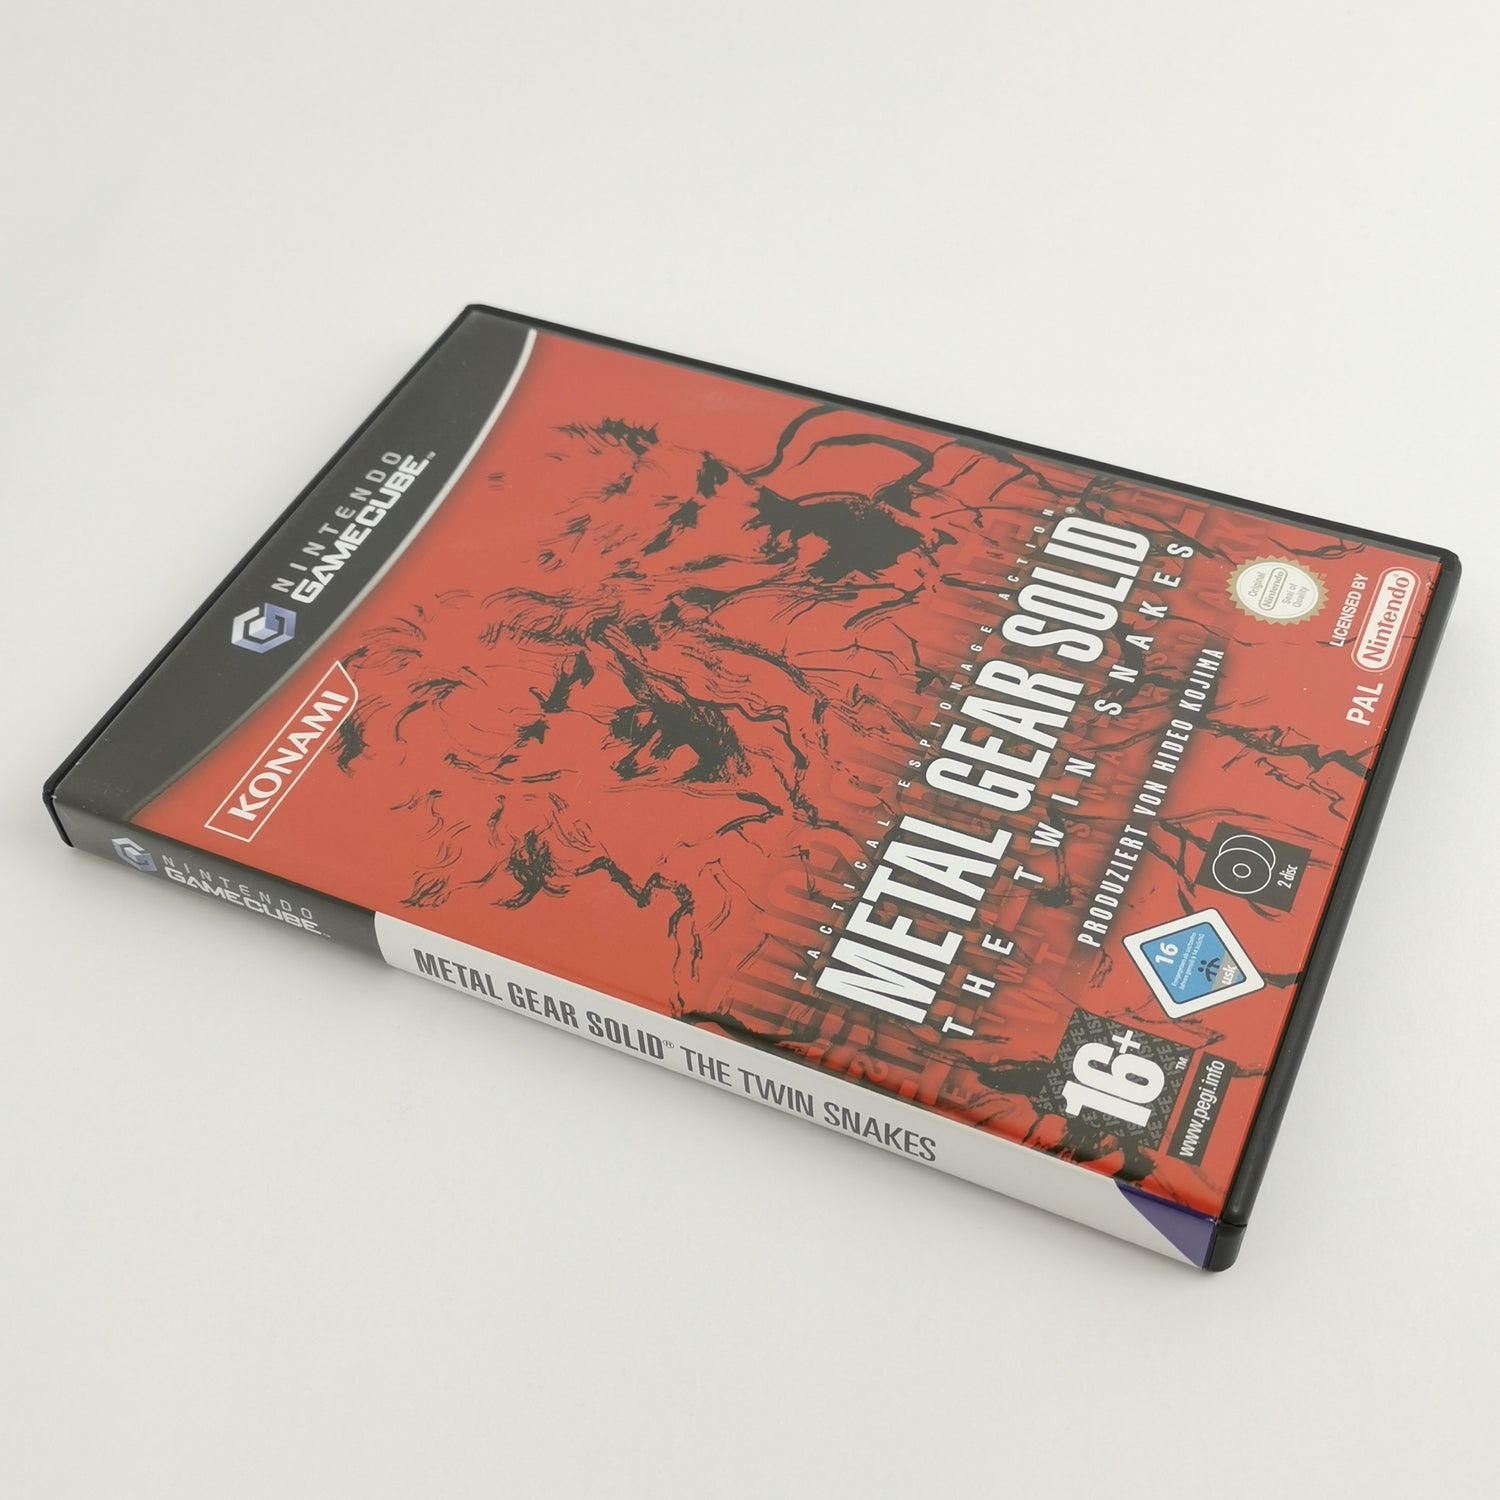 Nintendo Gamecube Game: Metal Gear Solid The Twin Snakes | Hideo Kojima - original packaging